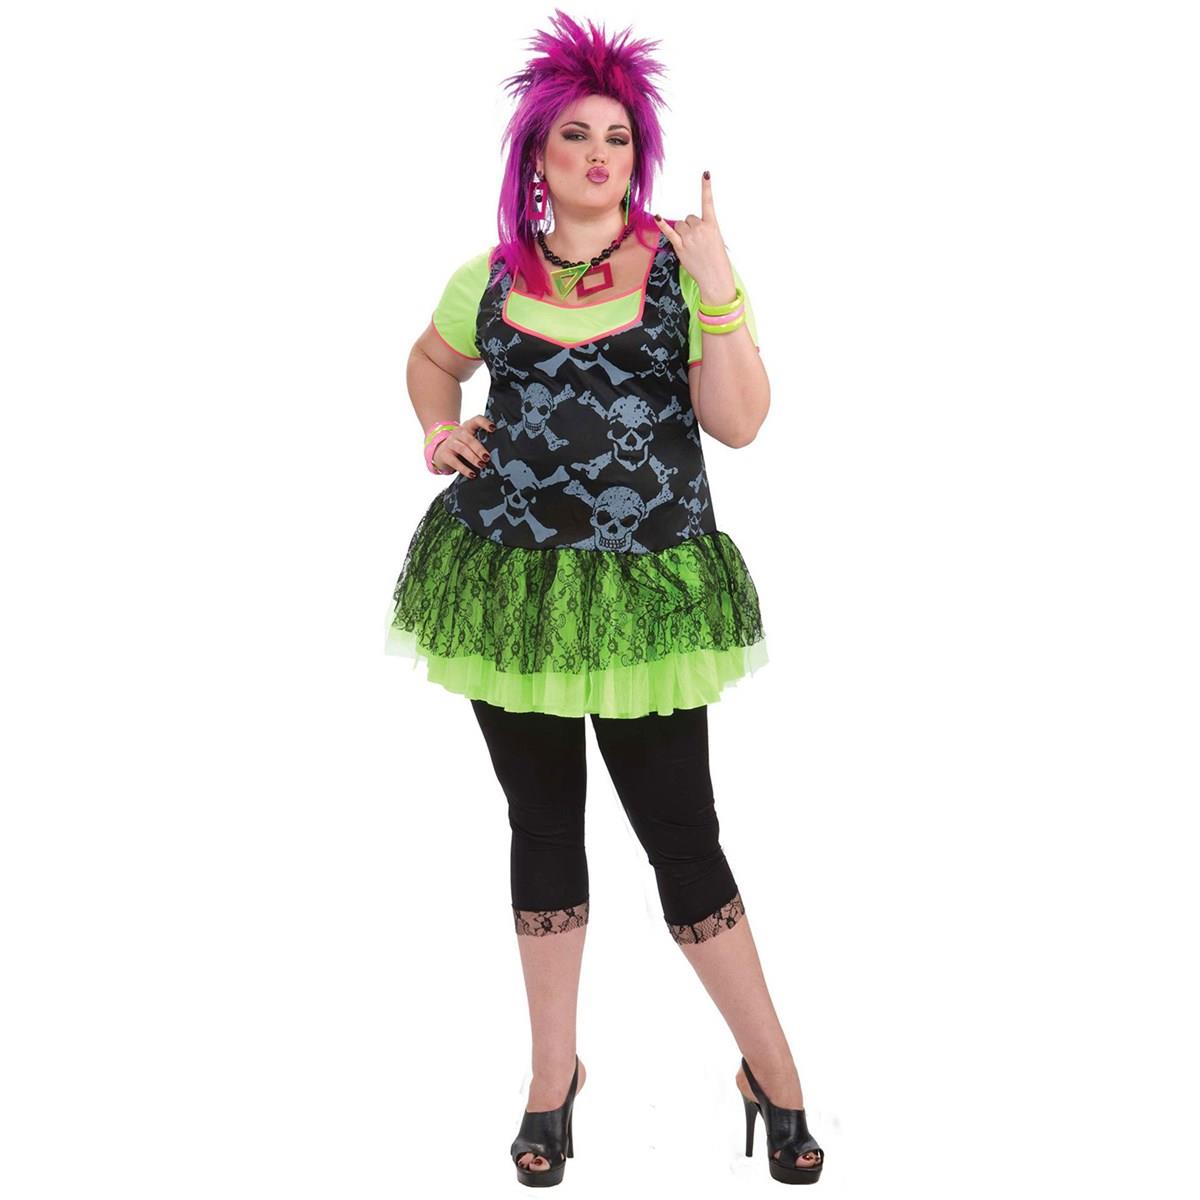 270730 Adult 80s Punk Lady Plus Size Costume